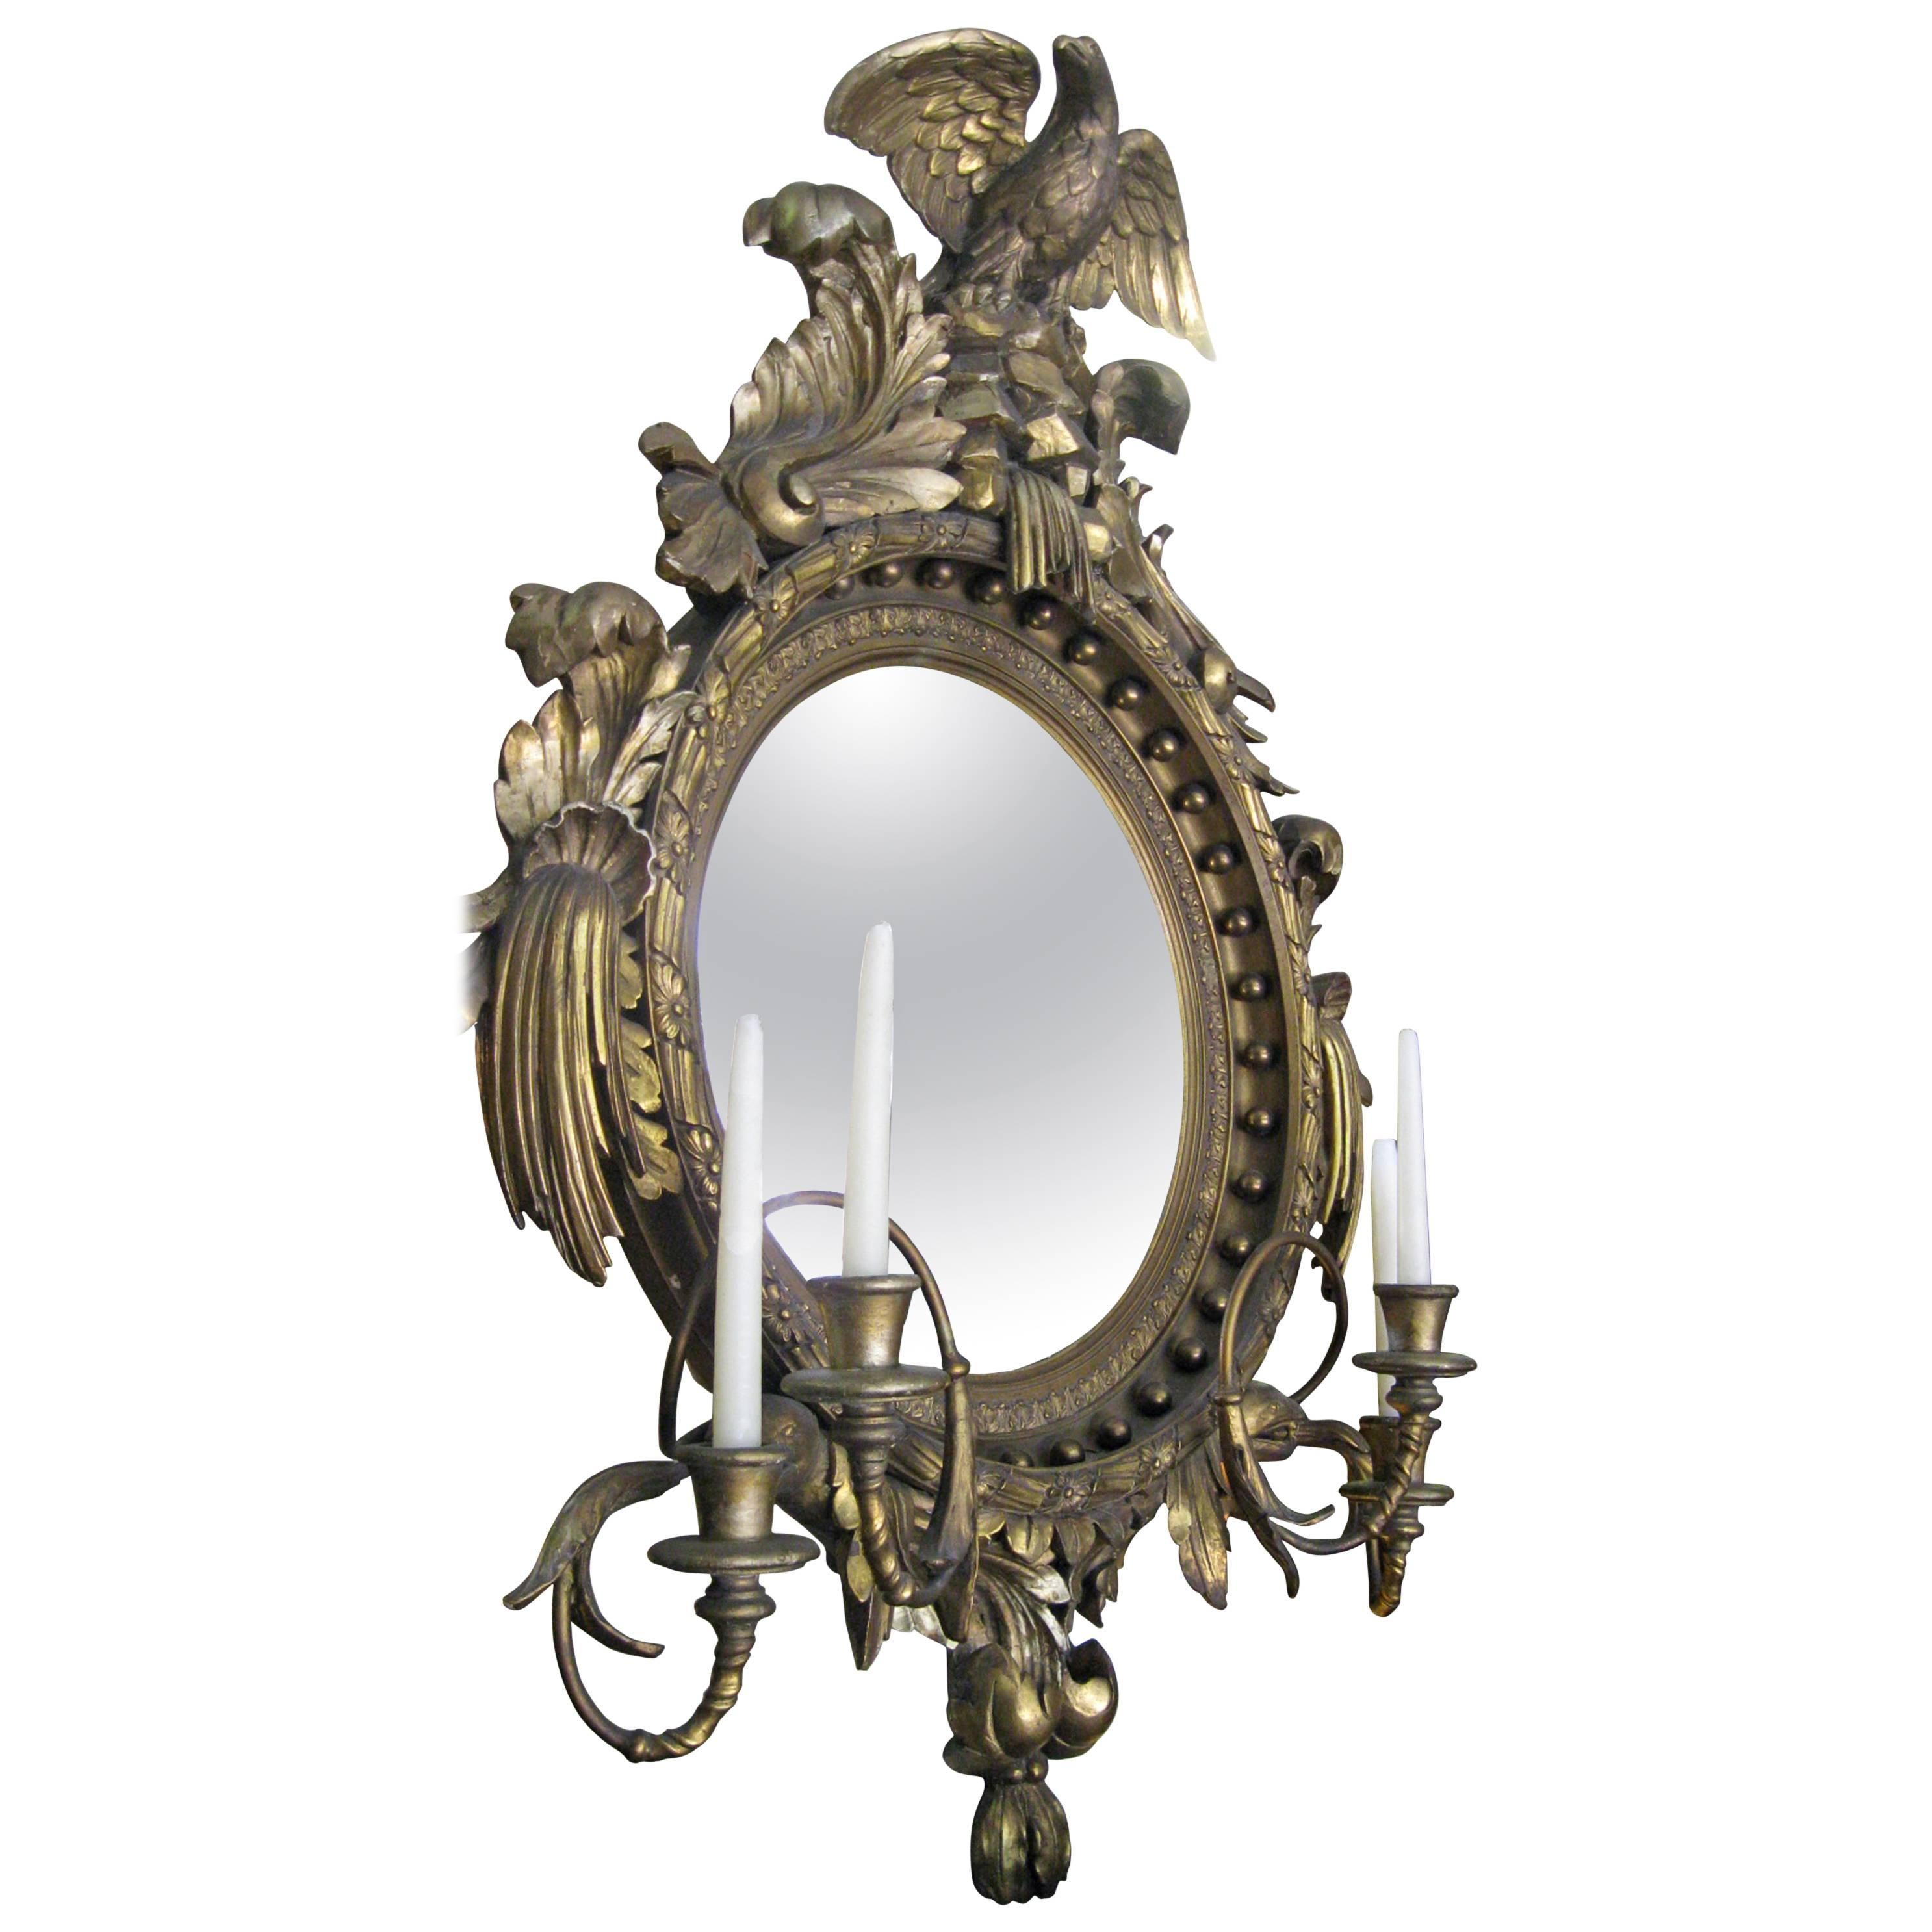 19th Century American Giltwood Convex Girandole Mirror